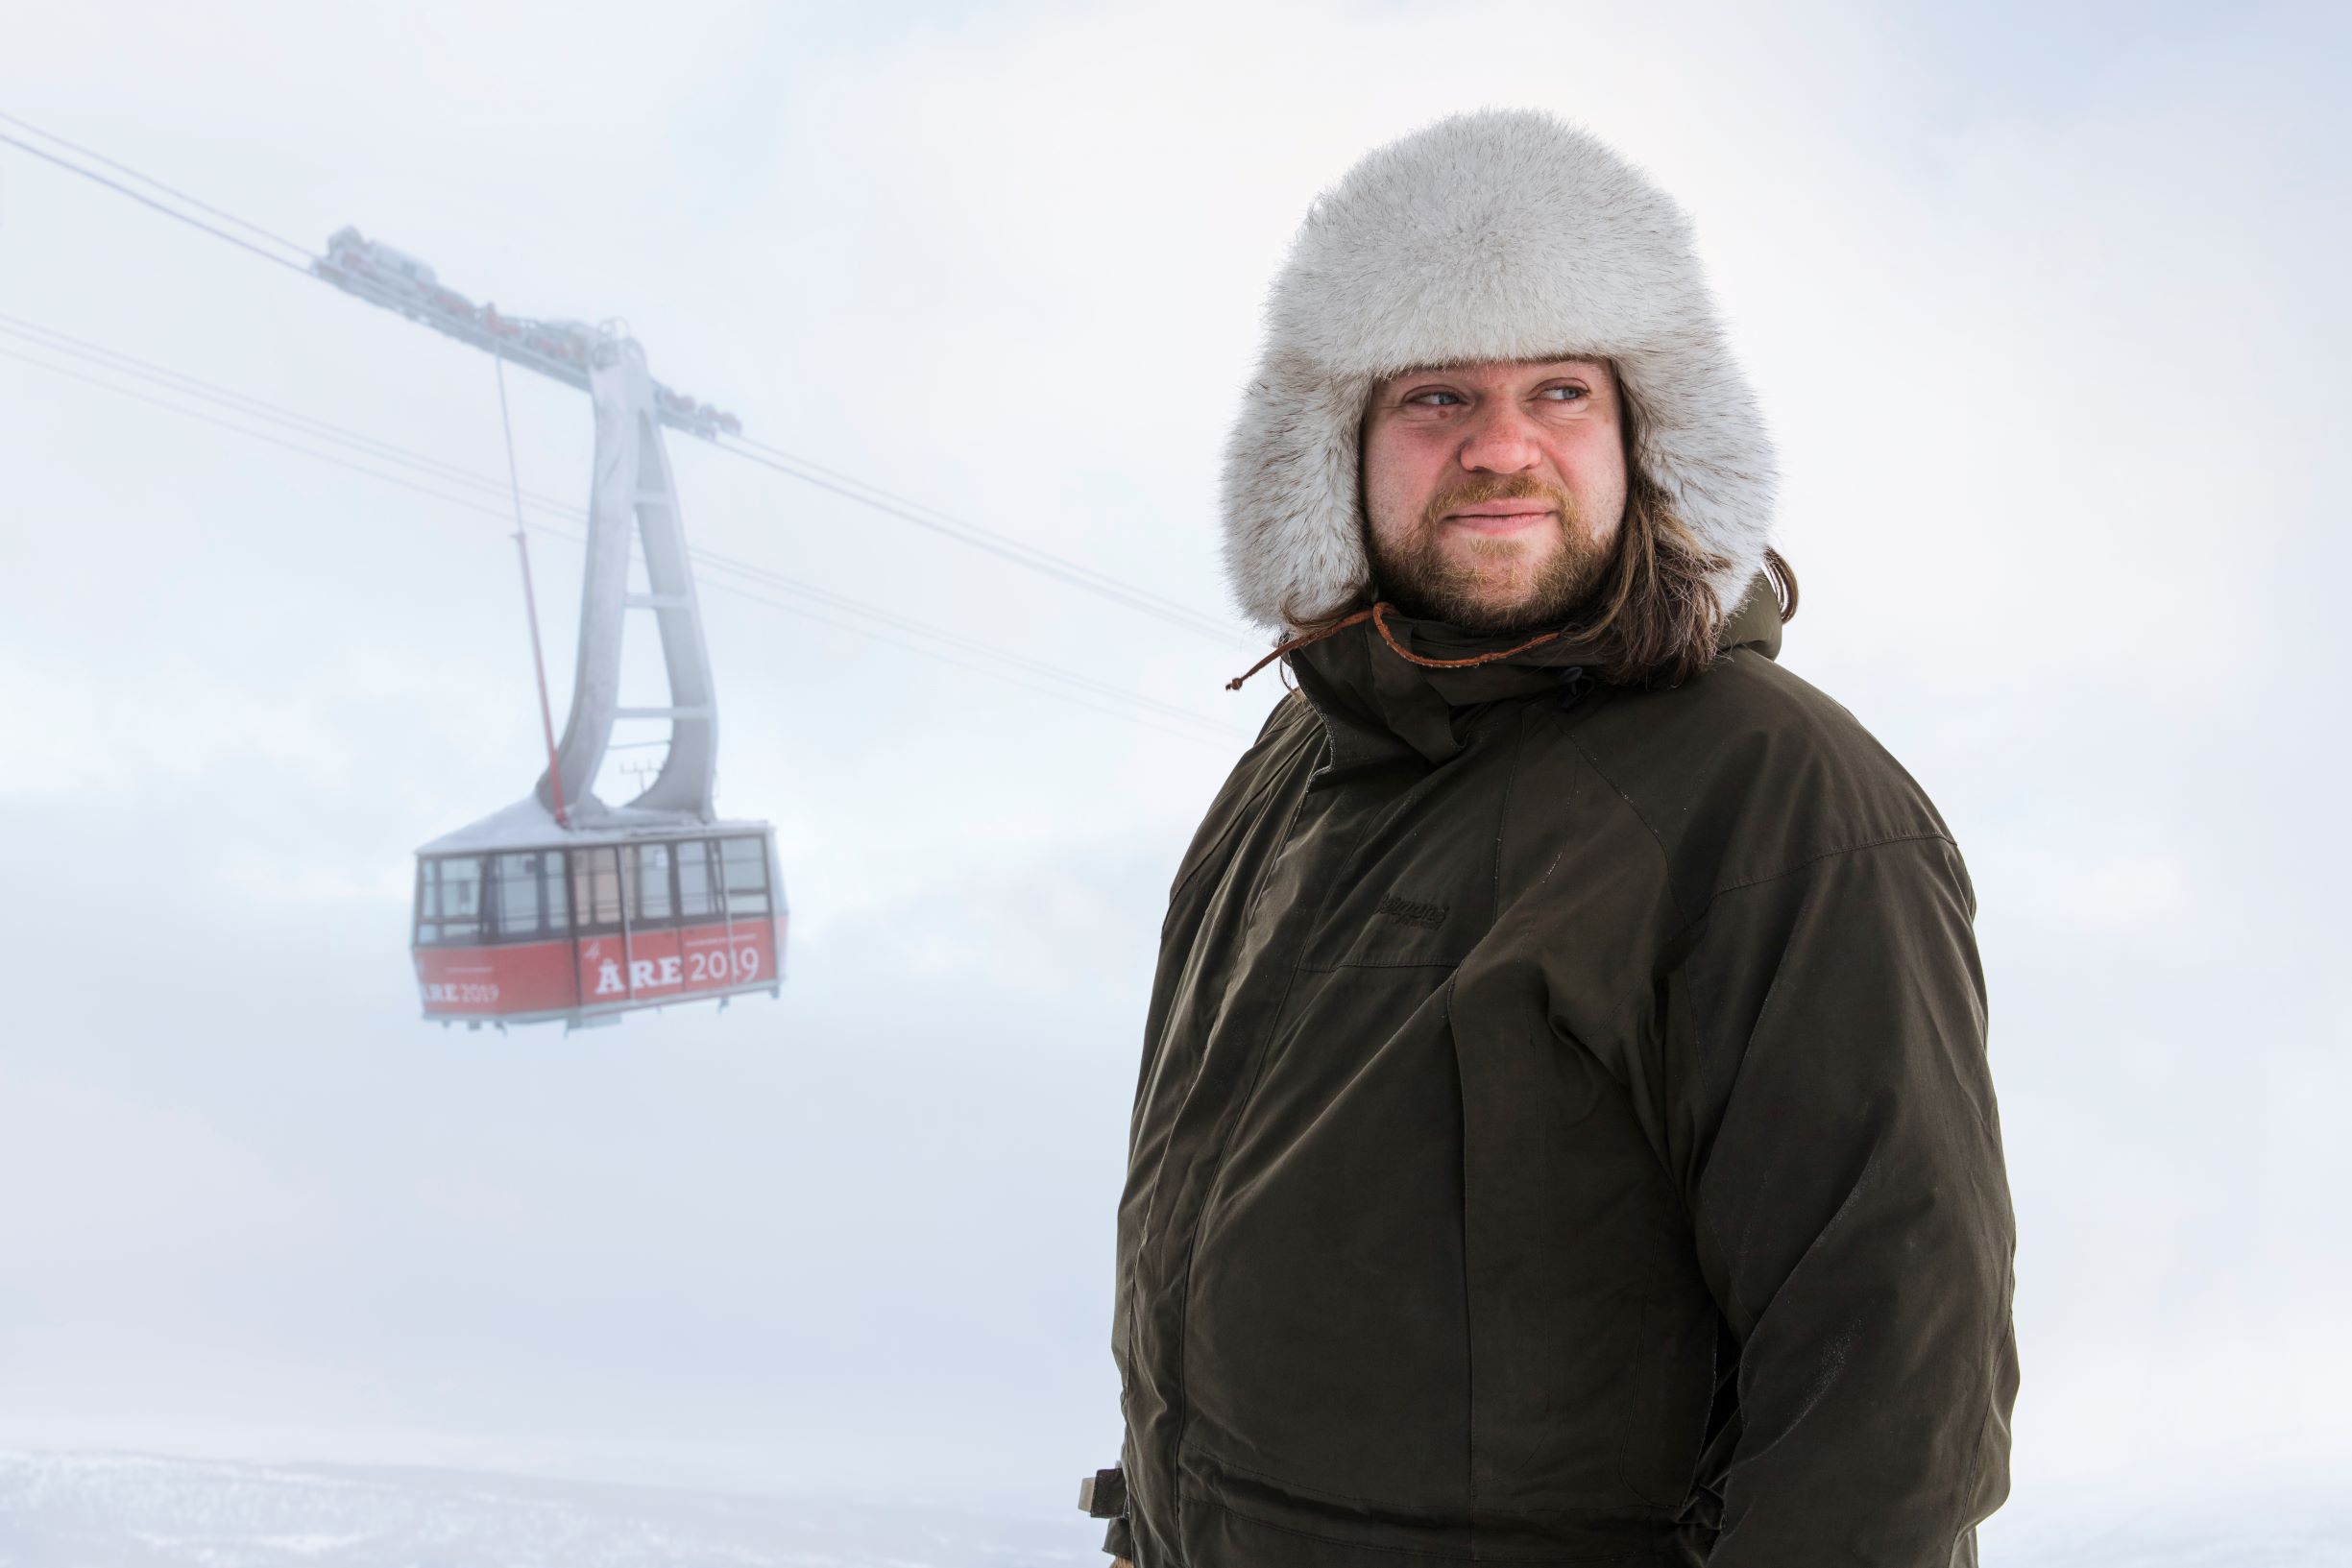 Magnus Nilsson beside the Åre Kabinbanan ski lift. All images courtesy of fortum.se